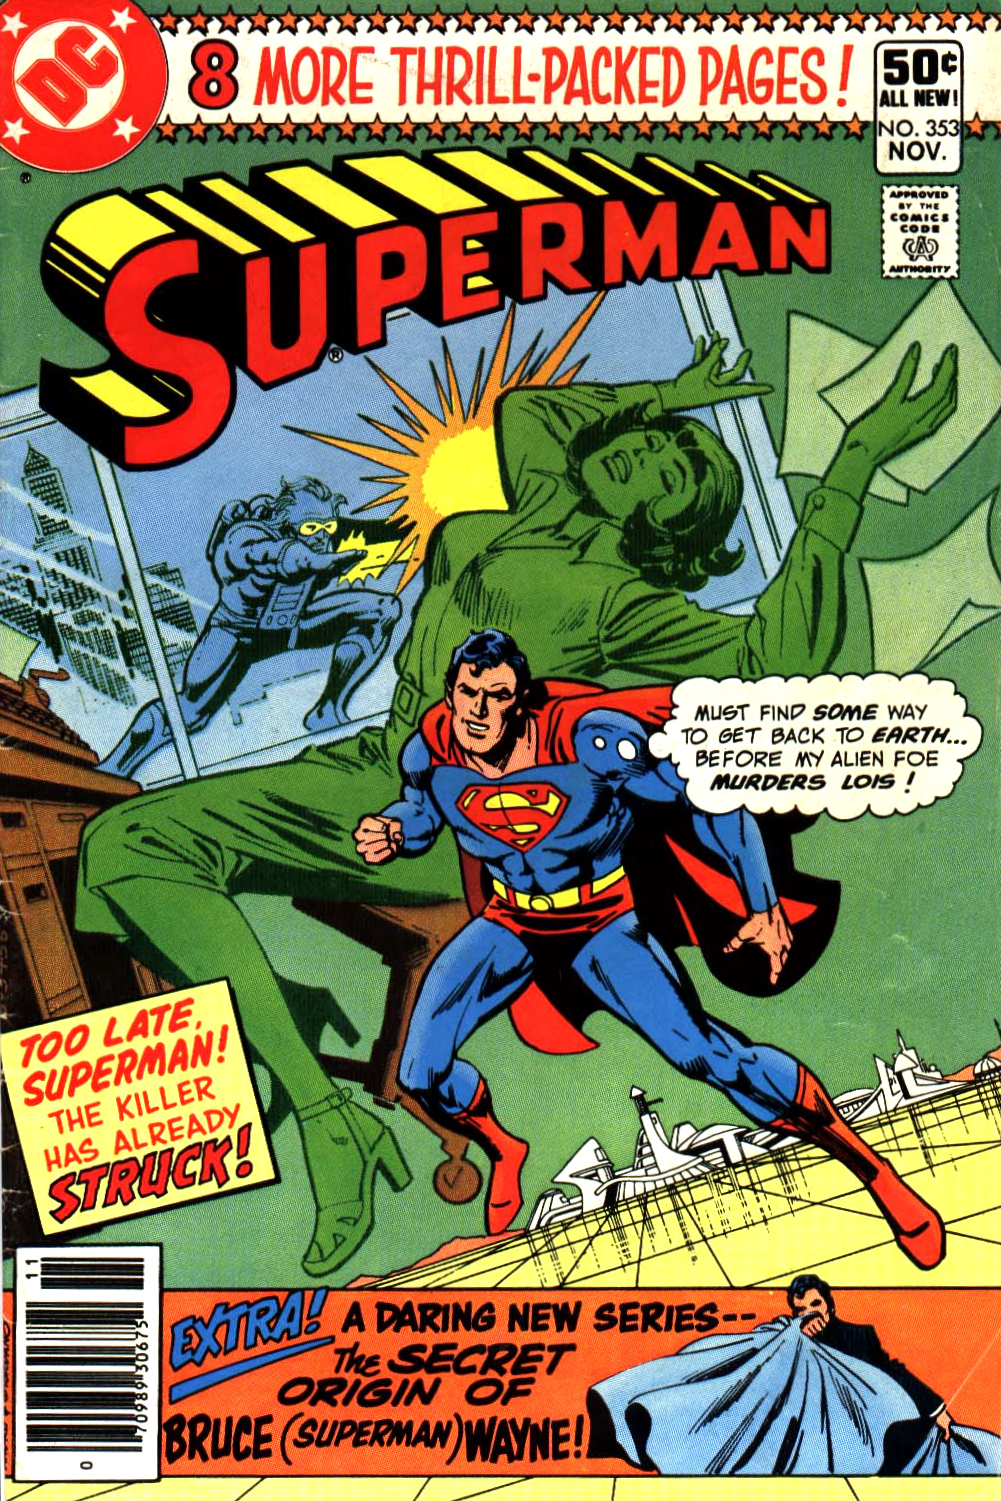 Figurine Pop SuperMan Comics - DC Super Heroes n°353 pas cher